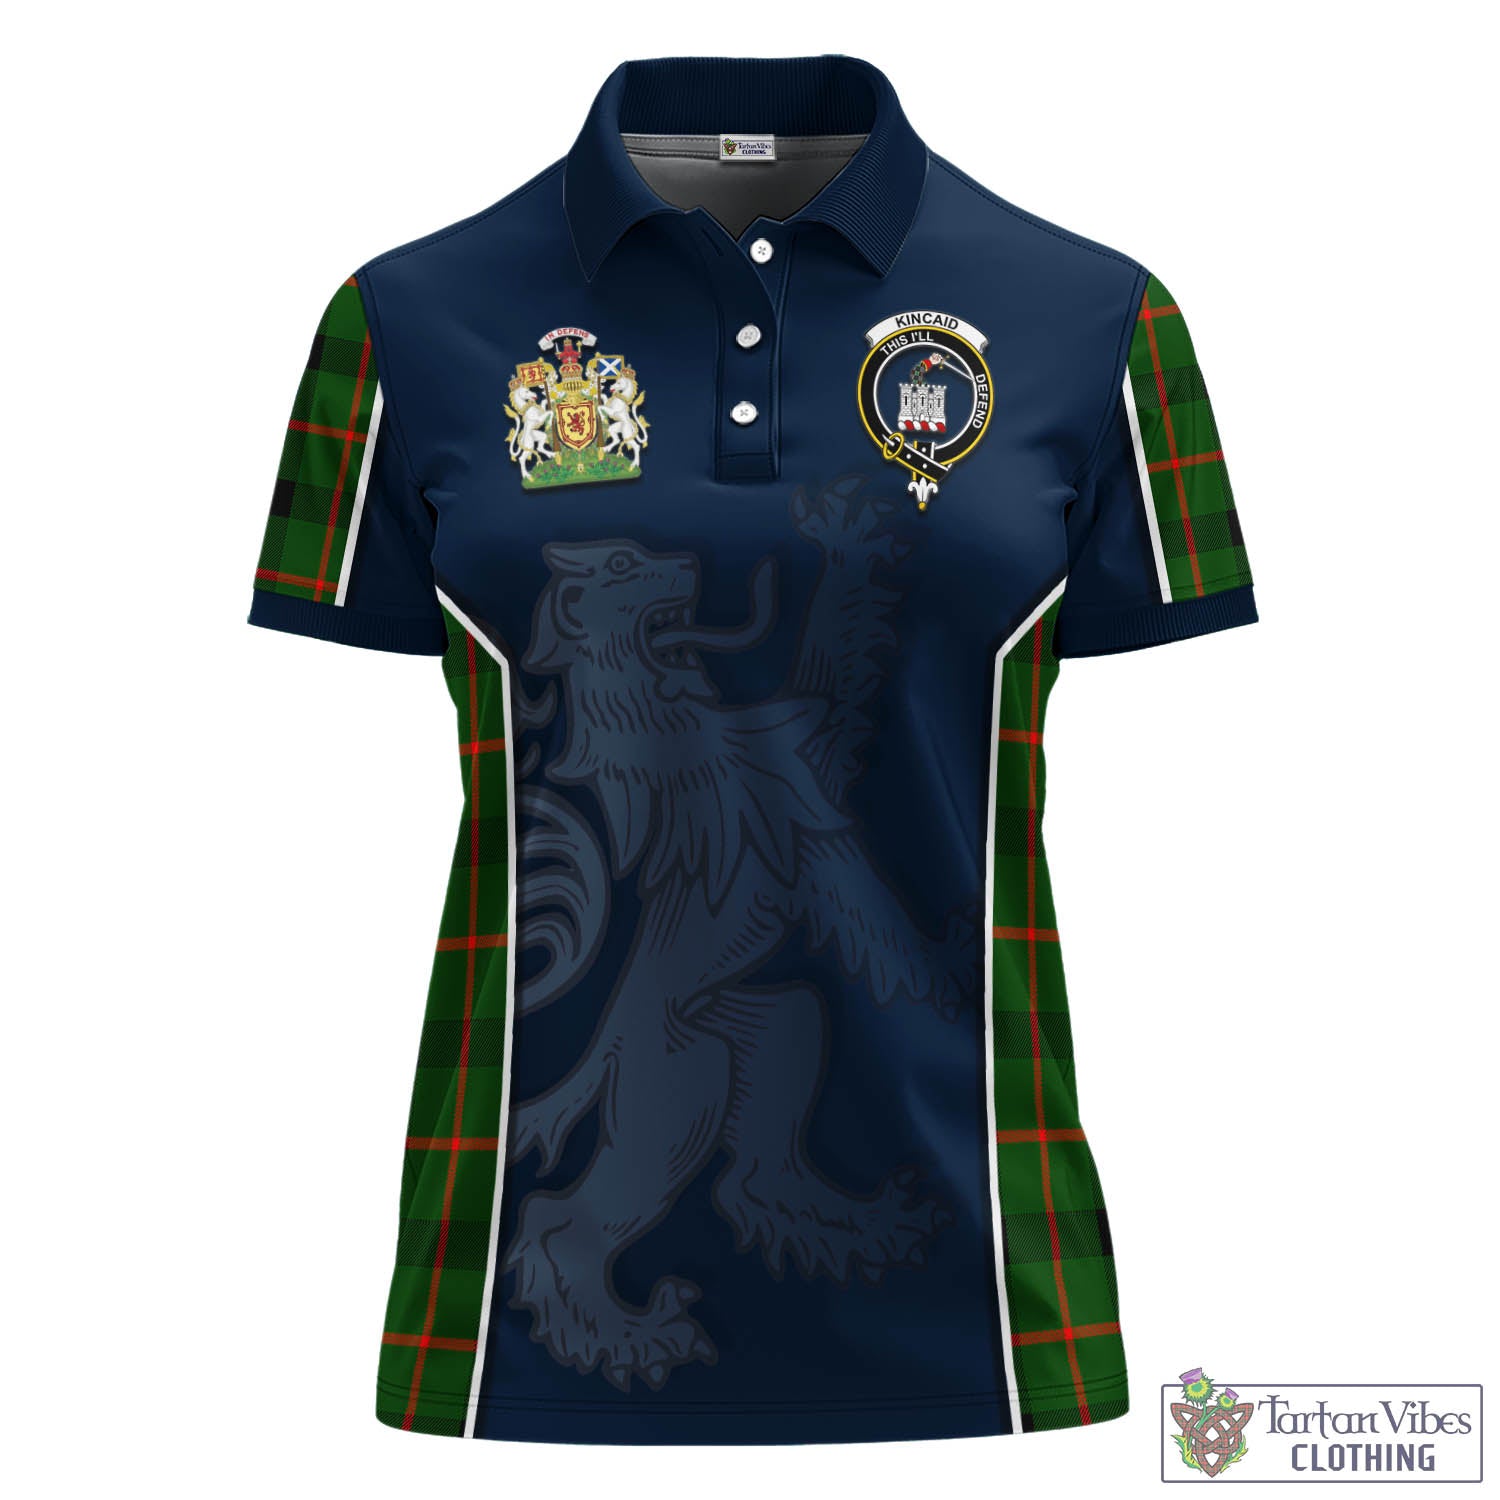 Tartan Vibes Clothing Kincaid Modern Tartan Women's Polo Shirt with Family Crest and Lion Rampant Vibes Sport Style